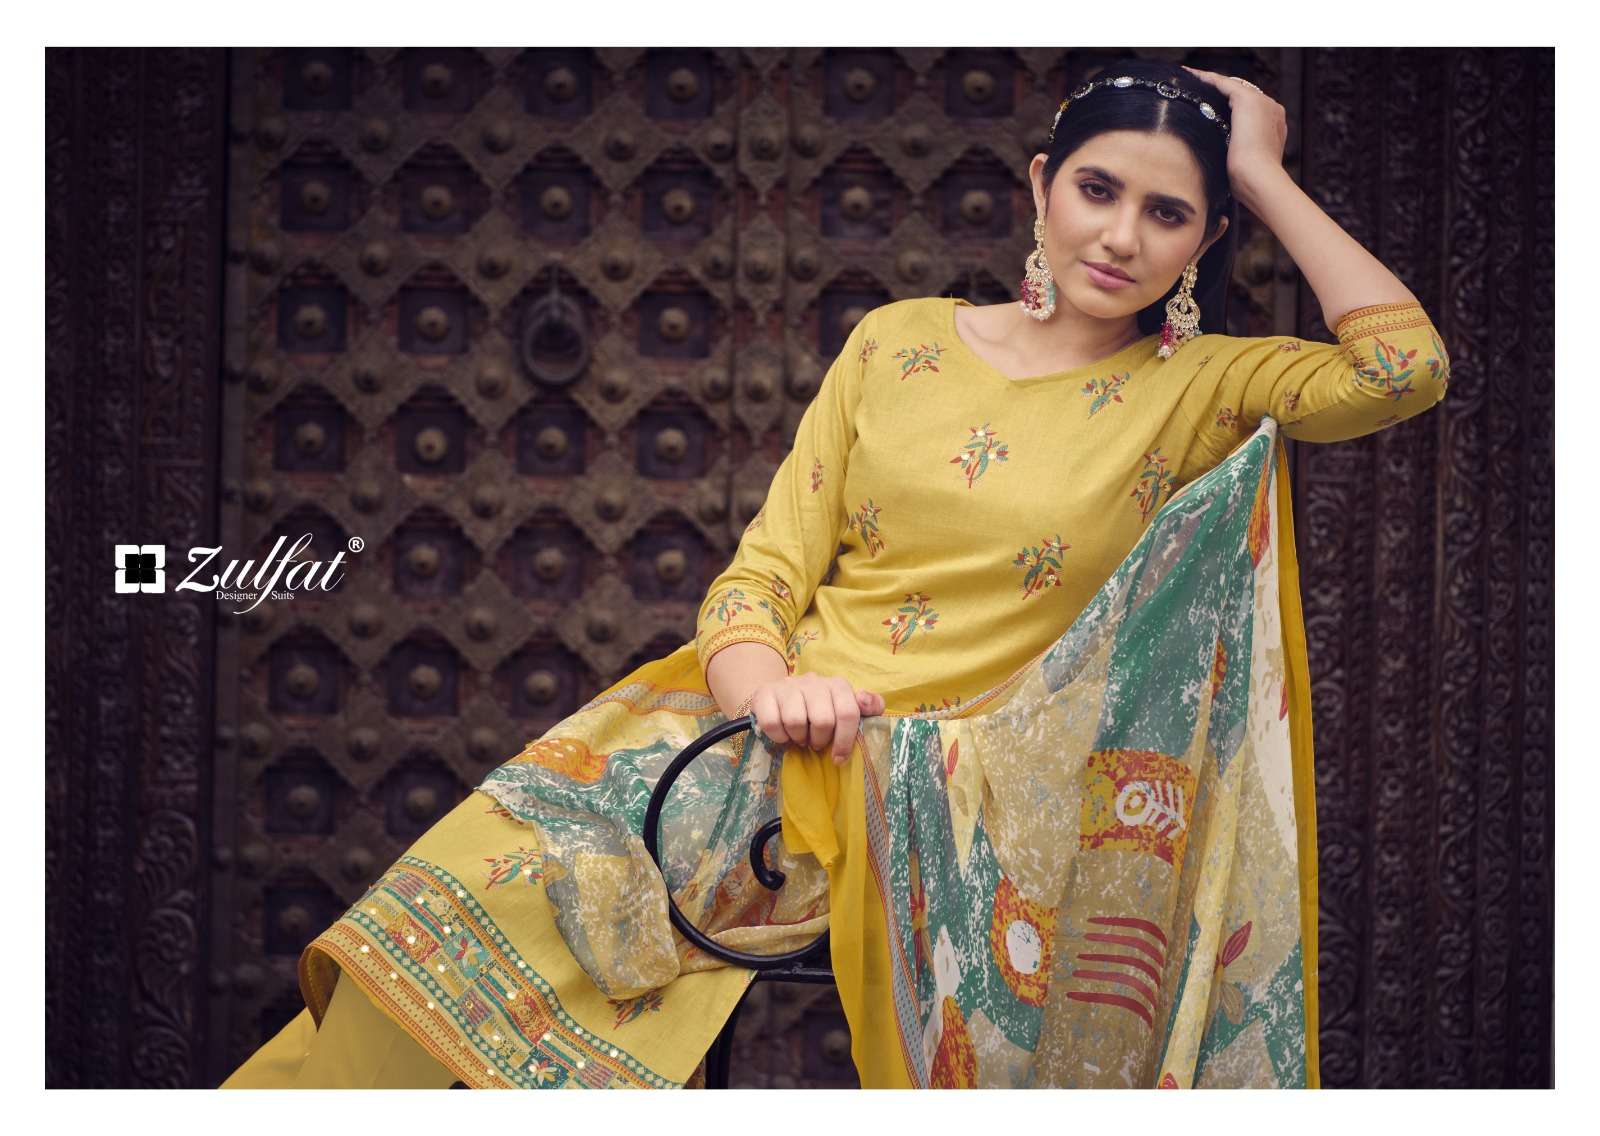 zulfat designer suits tamanna vol-3 premium cotton salwar suits collection online market surat